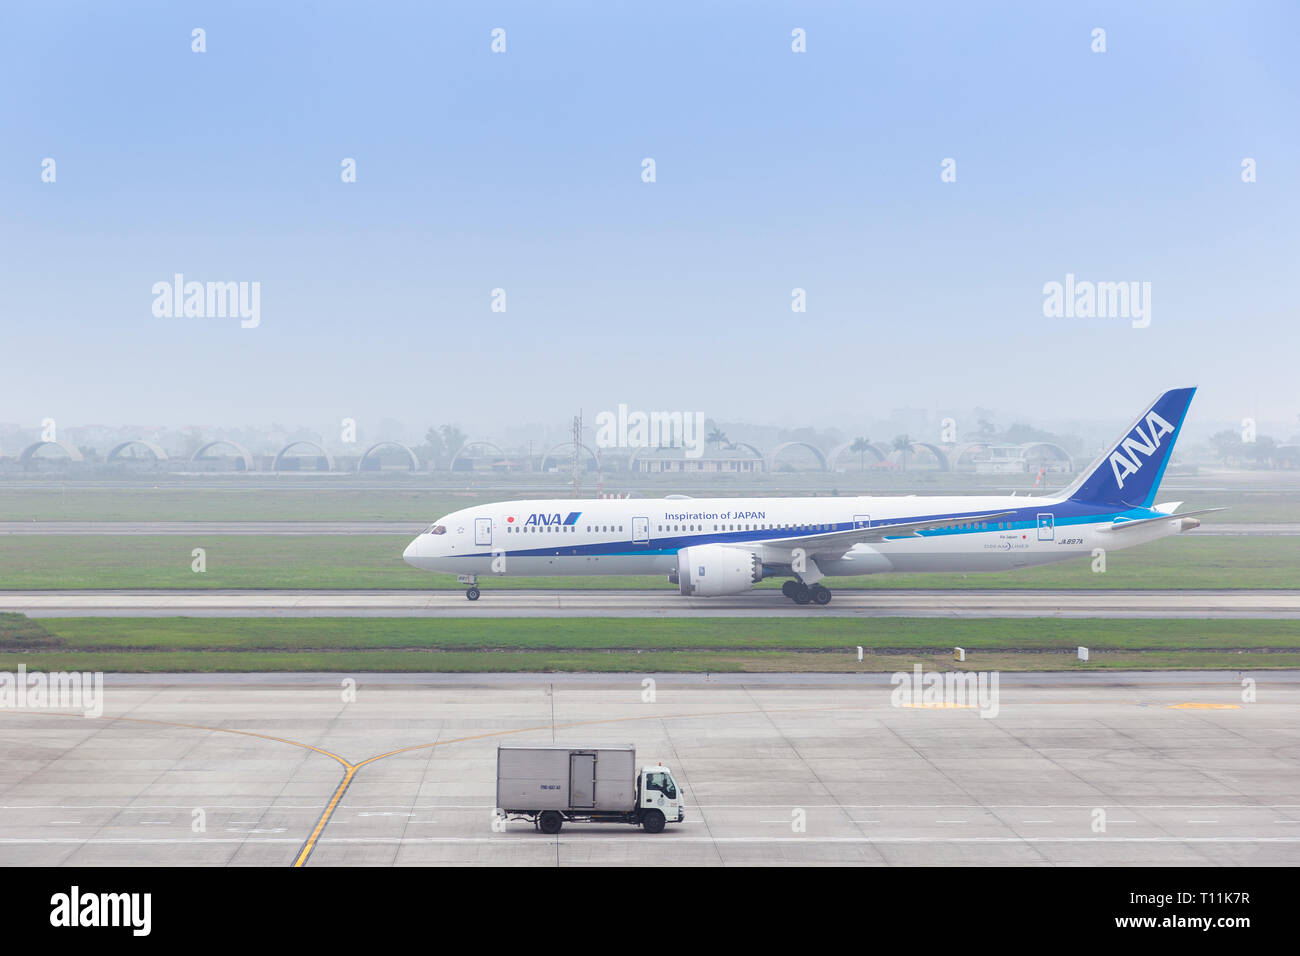 HANOI, VIETNAM - March 9, 2019 : All Nippon Airways (ANA) Japan aircraft taxiing on runway of Noi Bai international airport in Hanoi (HAN), Vietnam. Stock Photo